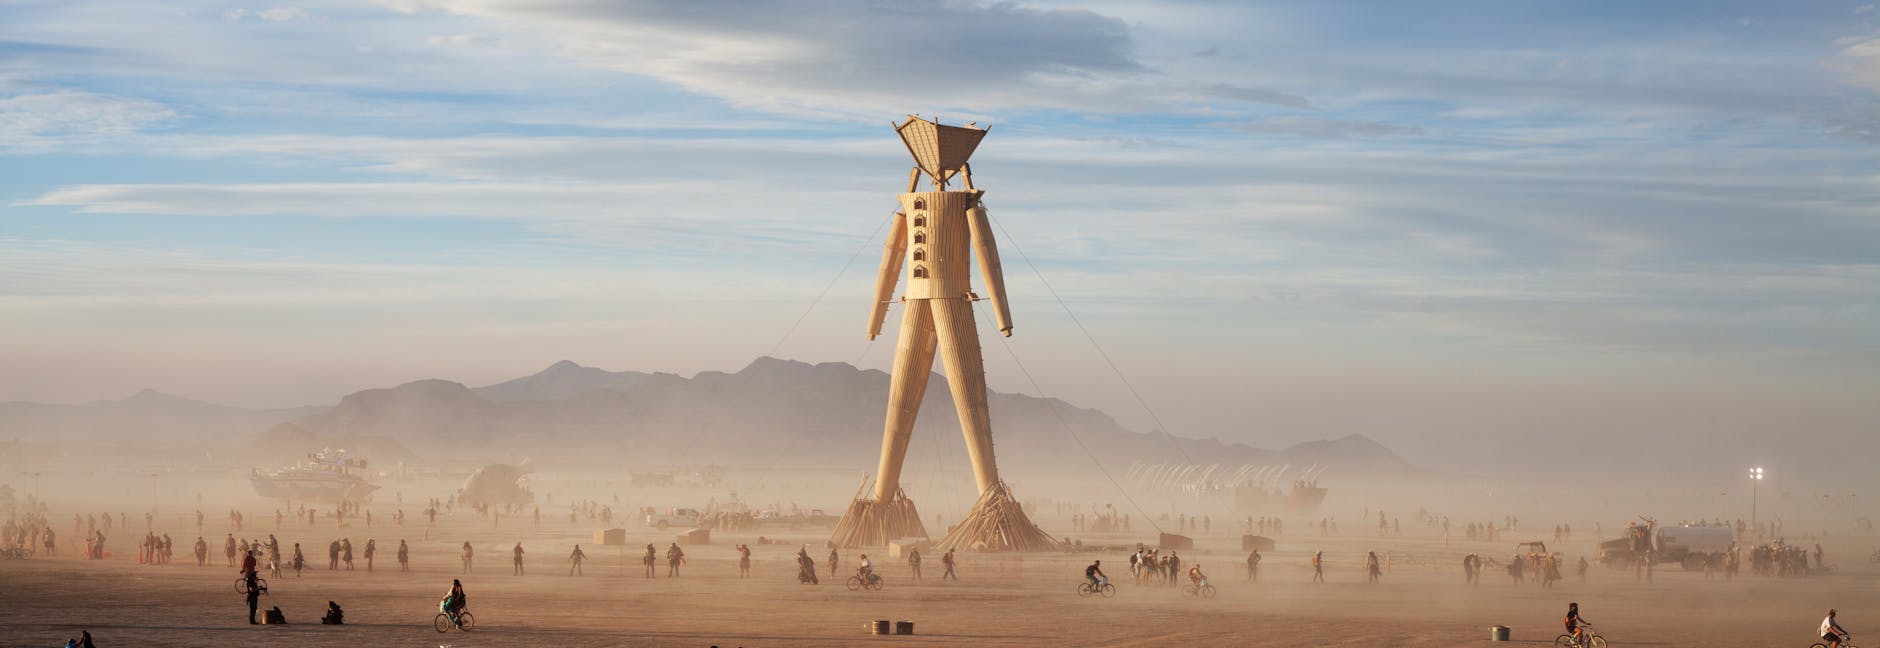 people walking around wooden statue of man in desert